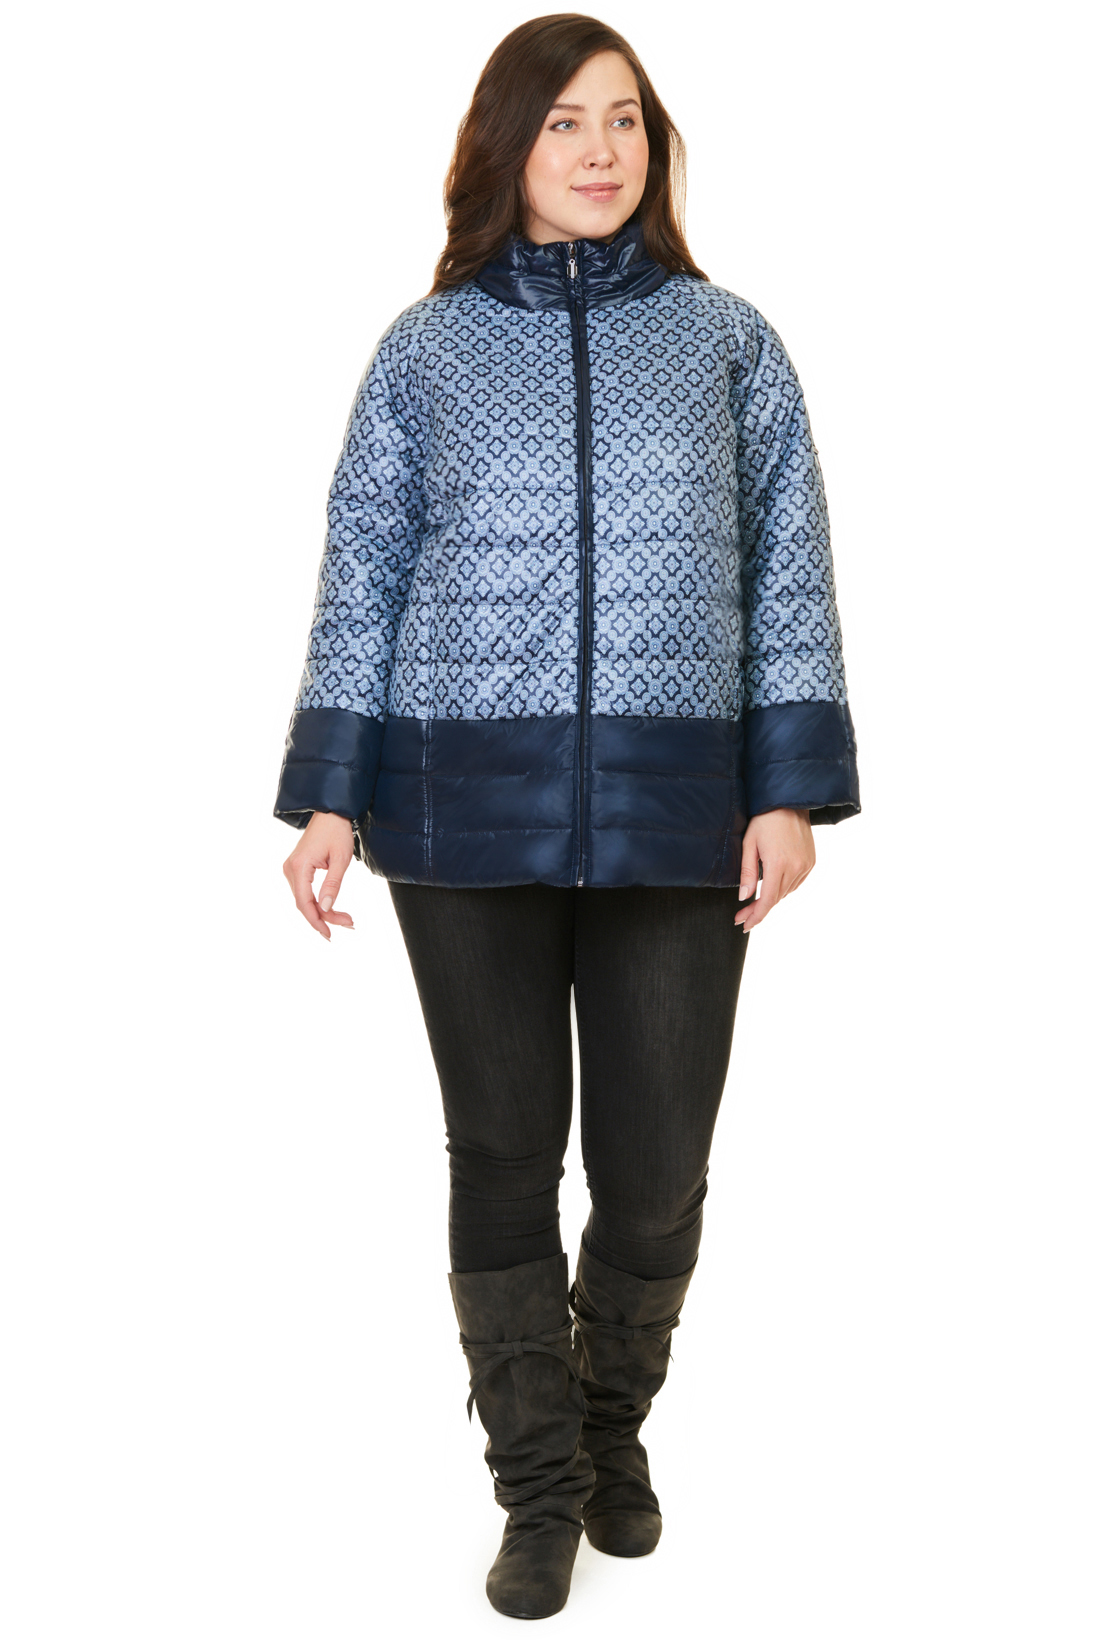 Куртка SIZE+ с орнаментом (арт. baon B037121), размер 56, цвет dark navy printed#синий Куртка SIZE+ с орнаментом (арт. baon B037121) - фото 5